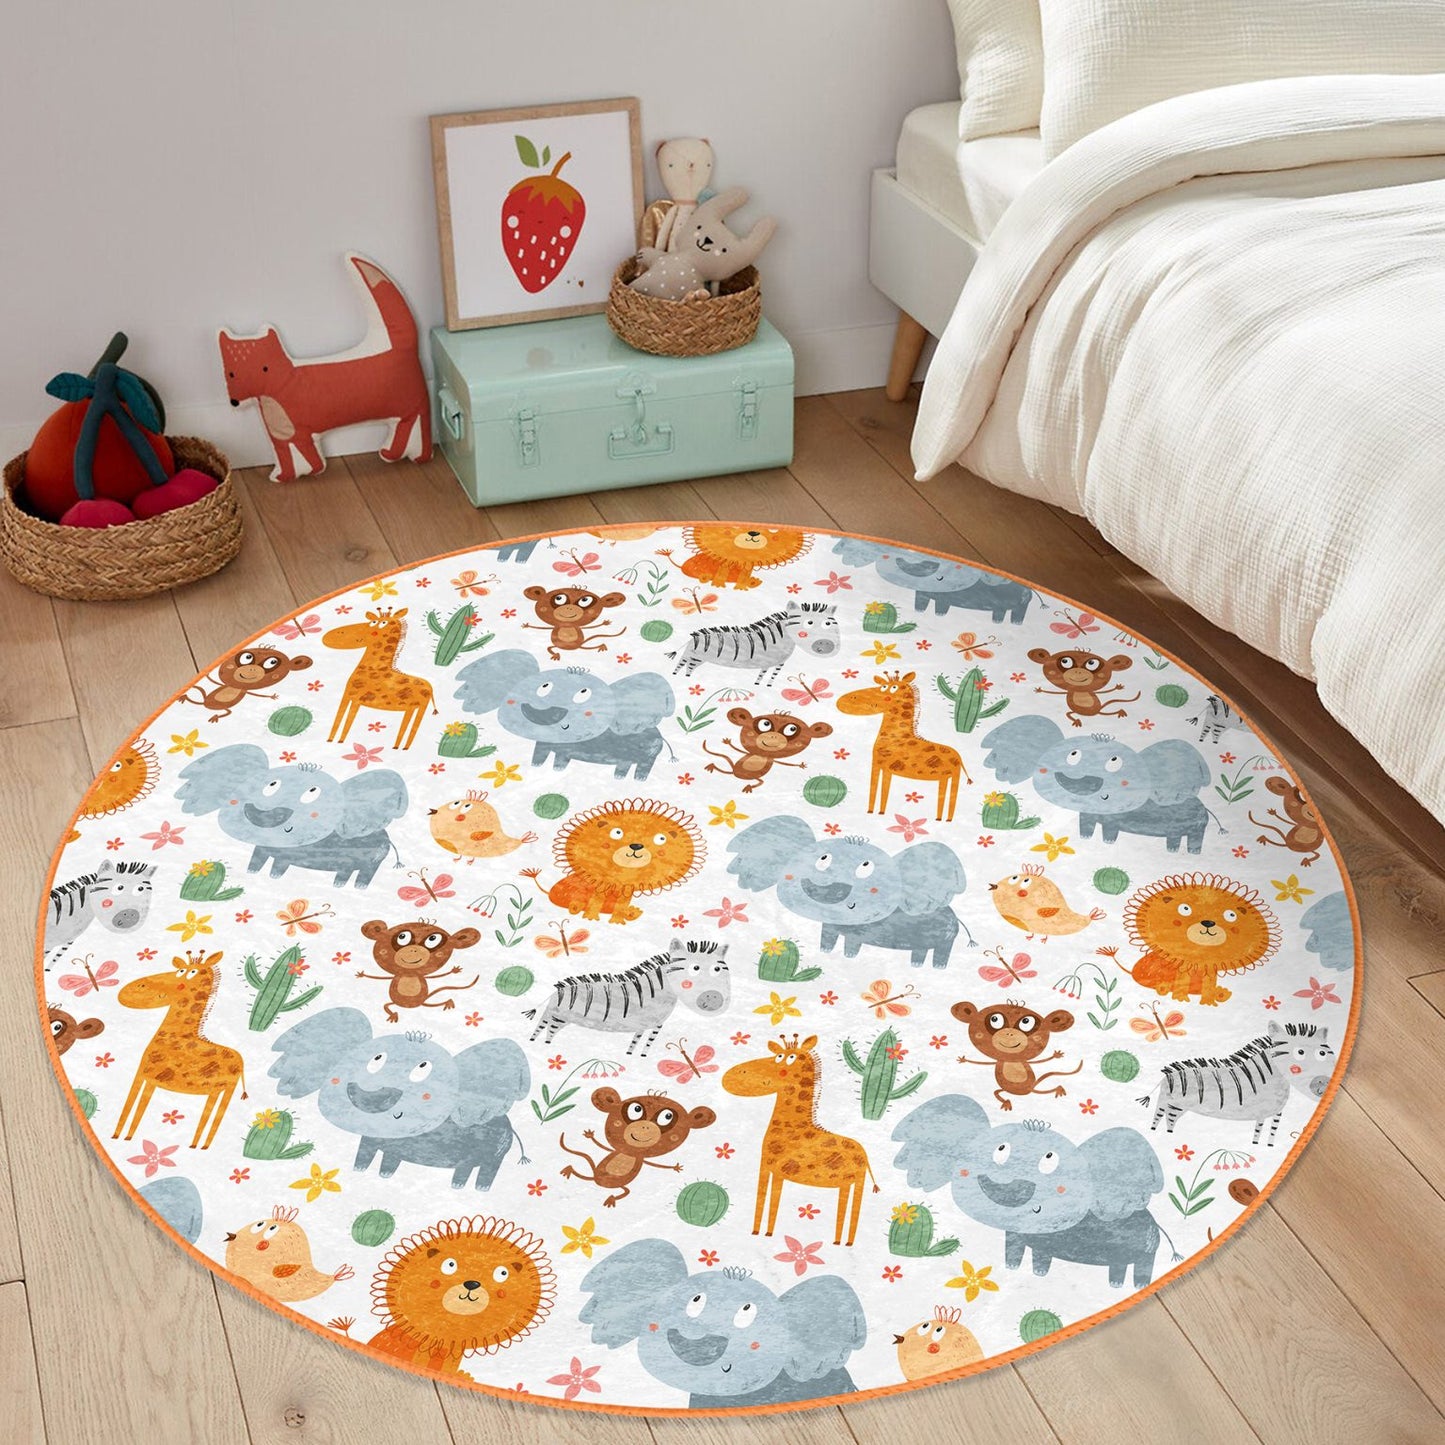 Homeezone's Vibrant Cute Animals Printed Kids Room Floor Mat